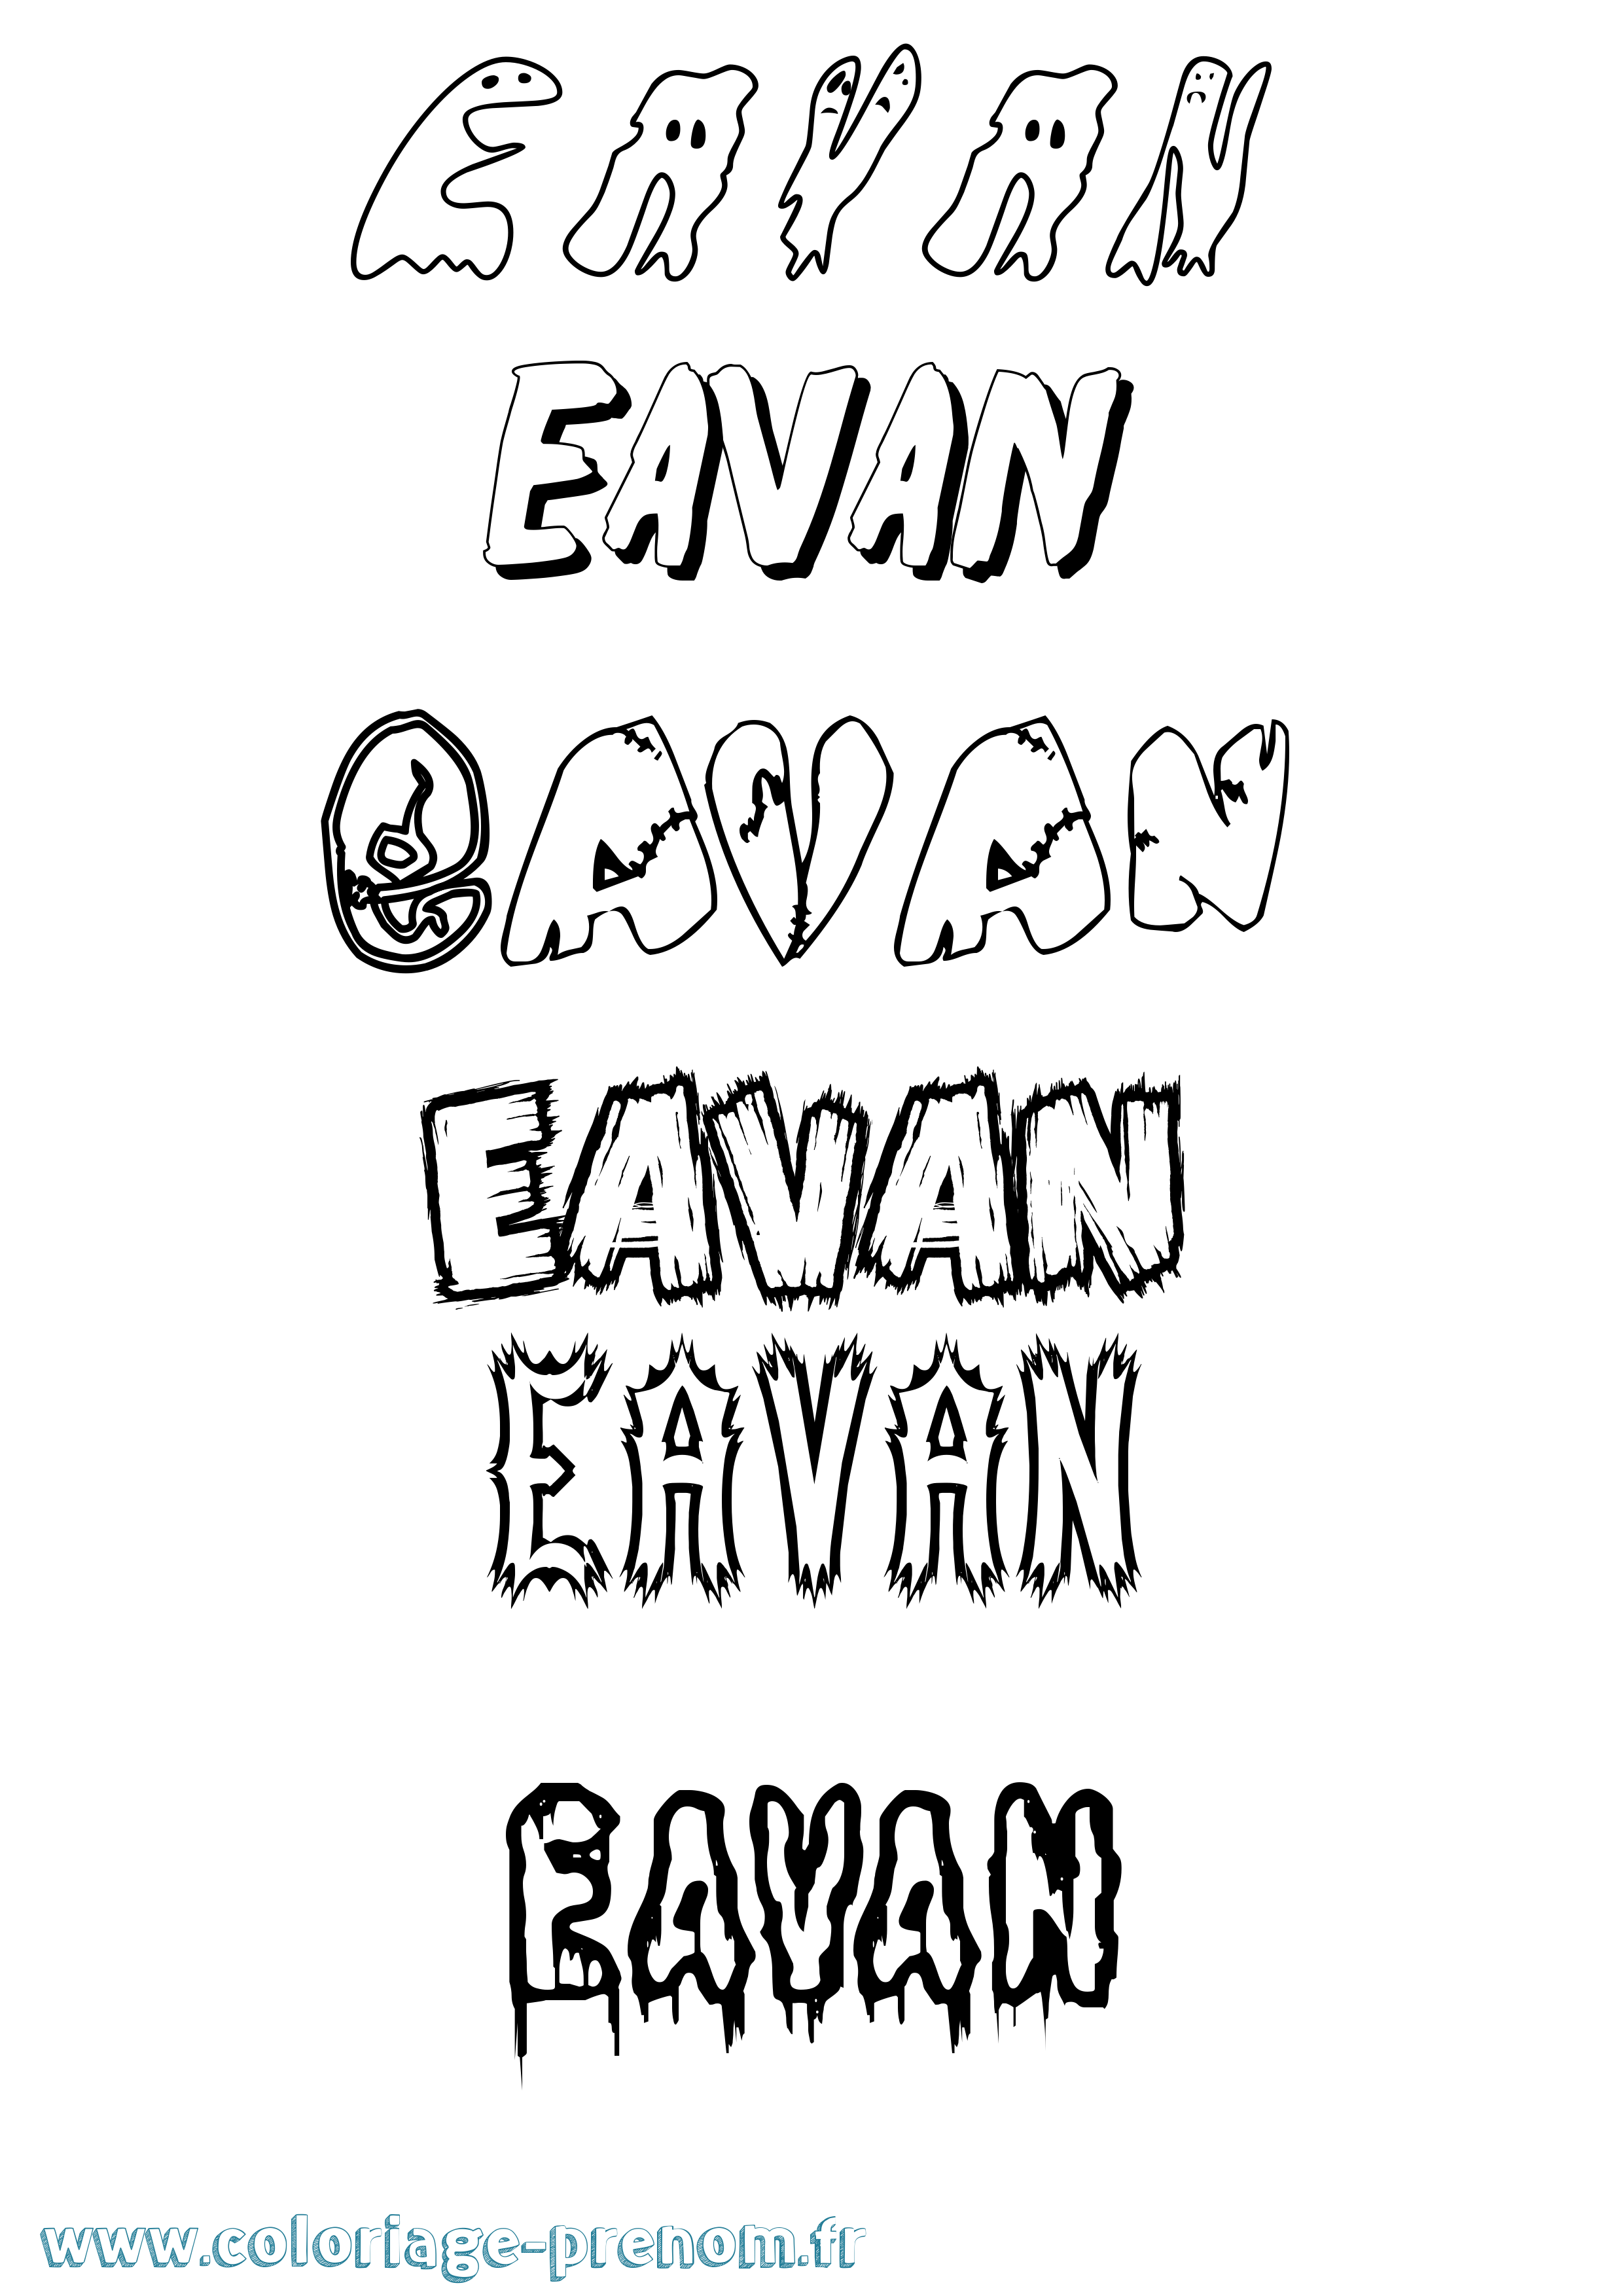 Coloriage prénom Eavan Frisson